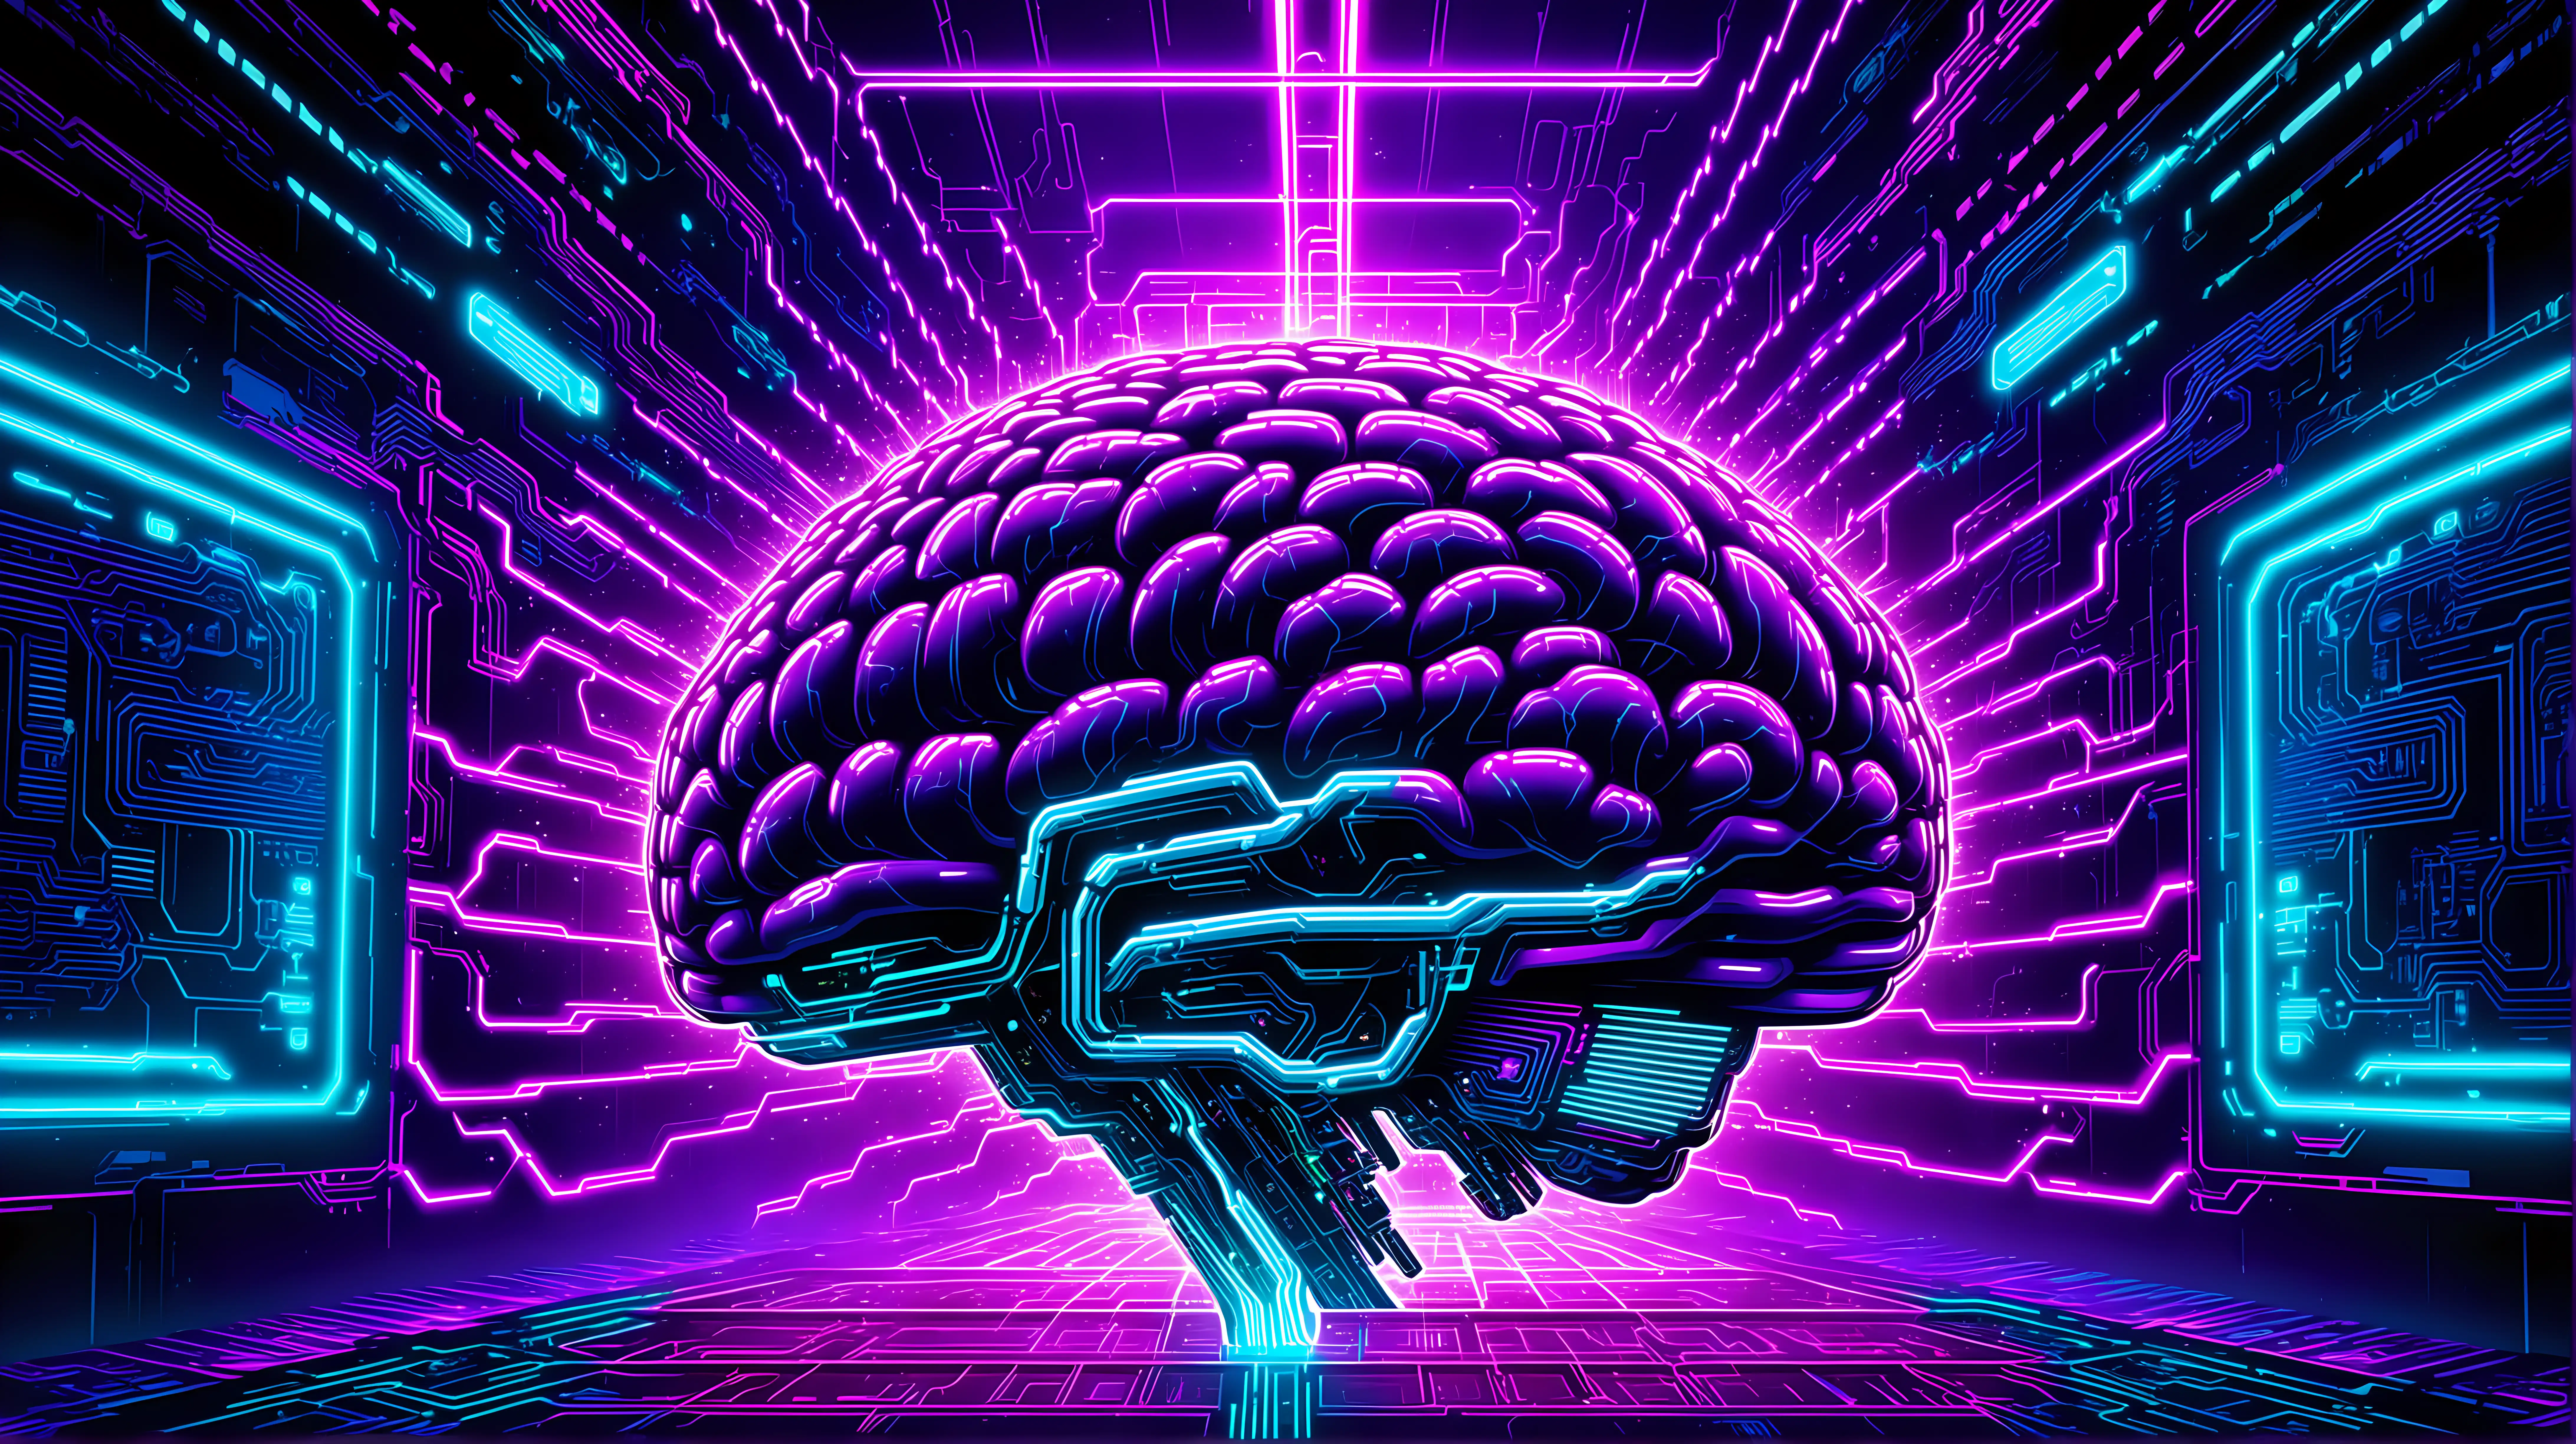 Futuristic AI Brain with Bioluminescent Circuitry and Neon Lights